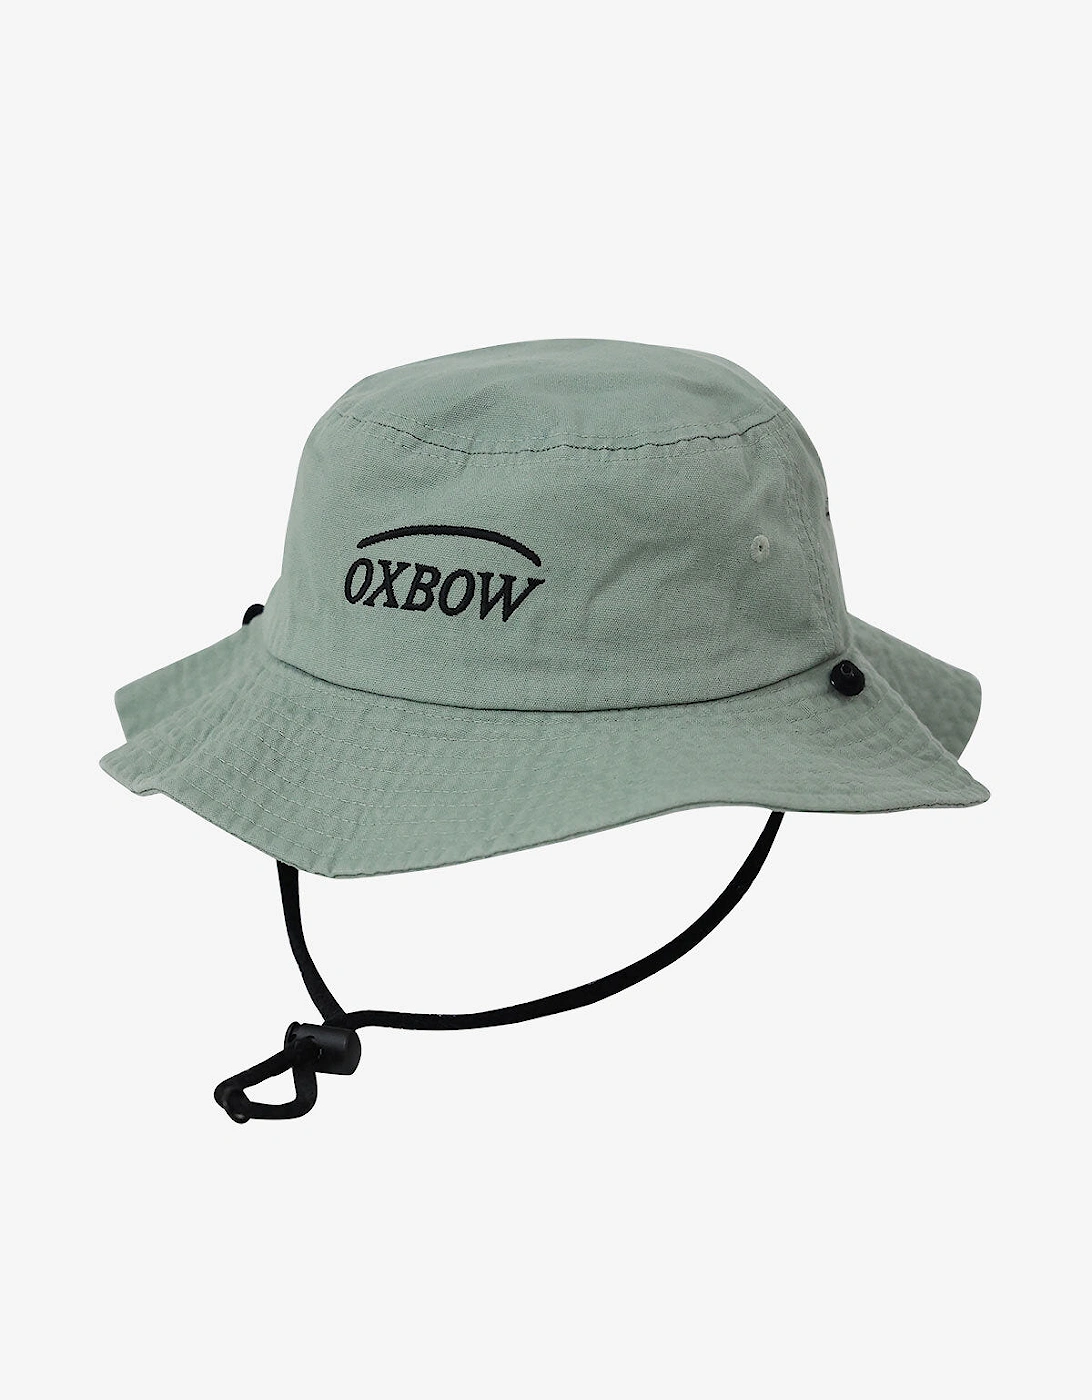 Ebush Bushman Boonie Safari Outback Bucket Hat